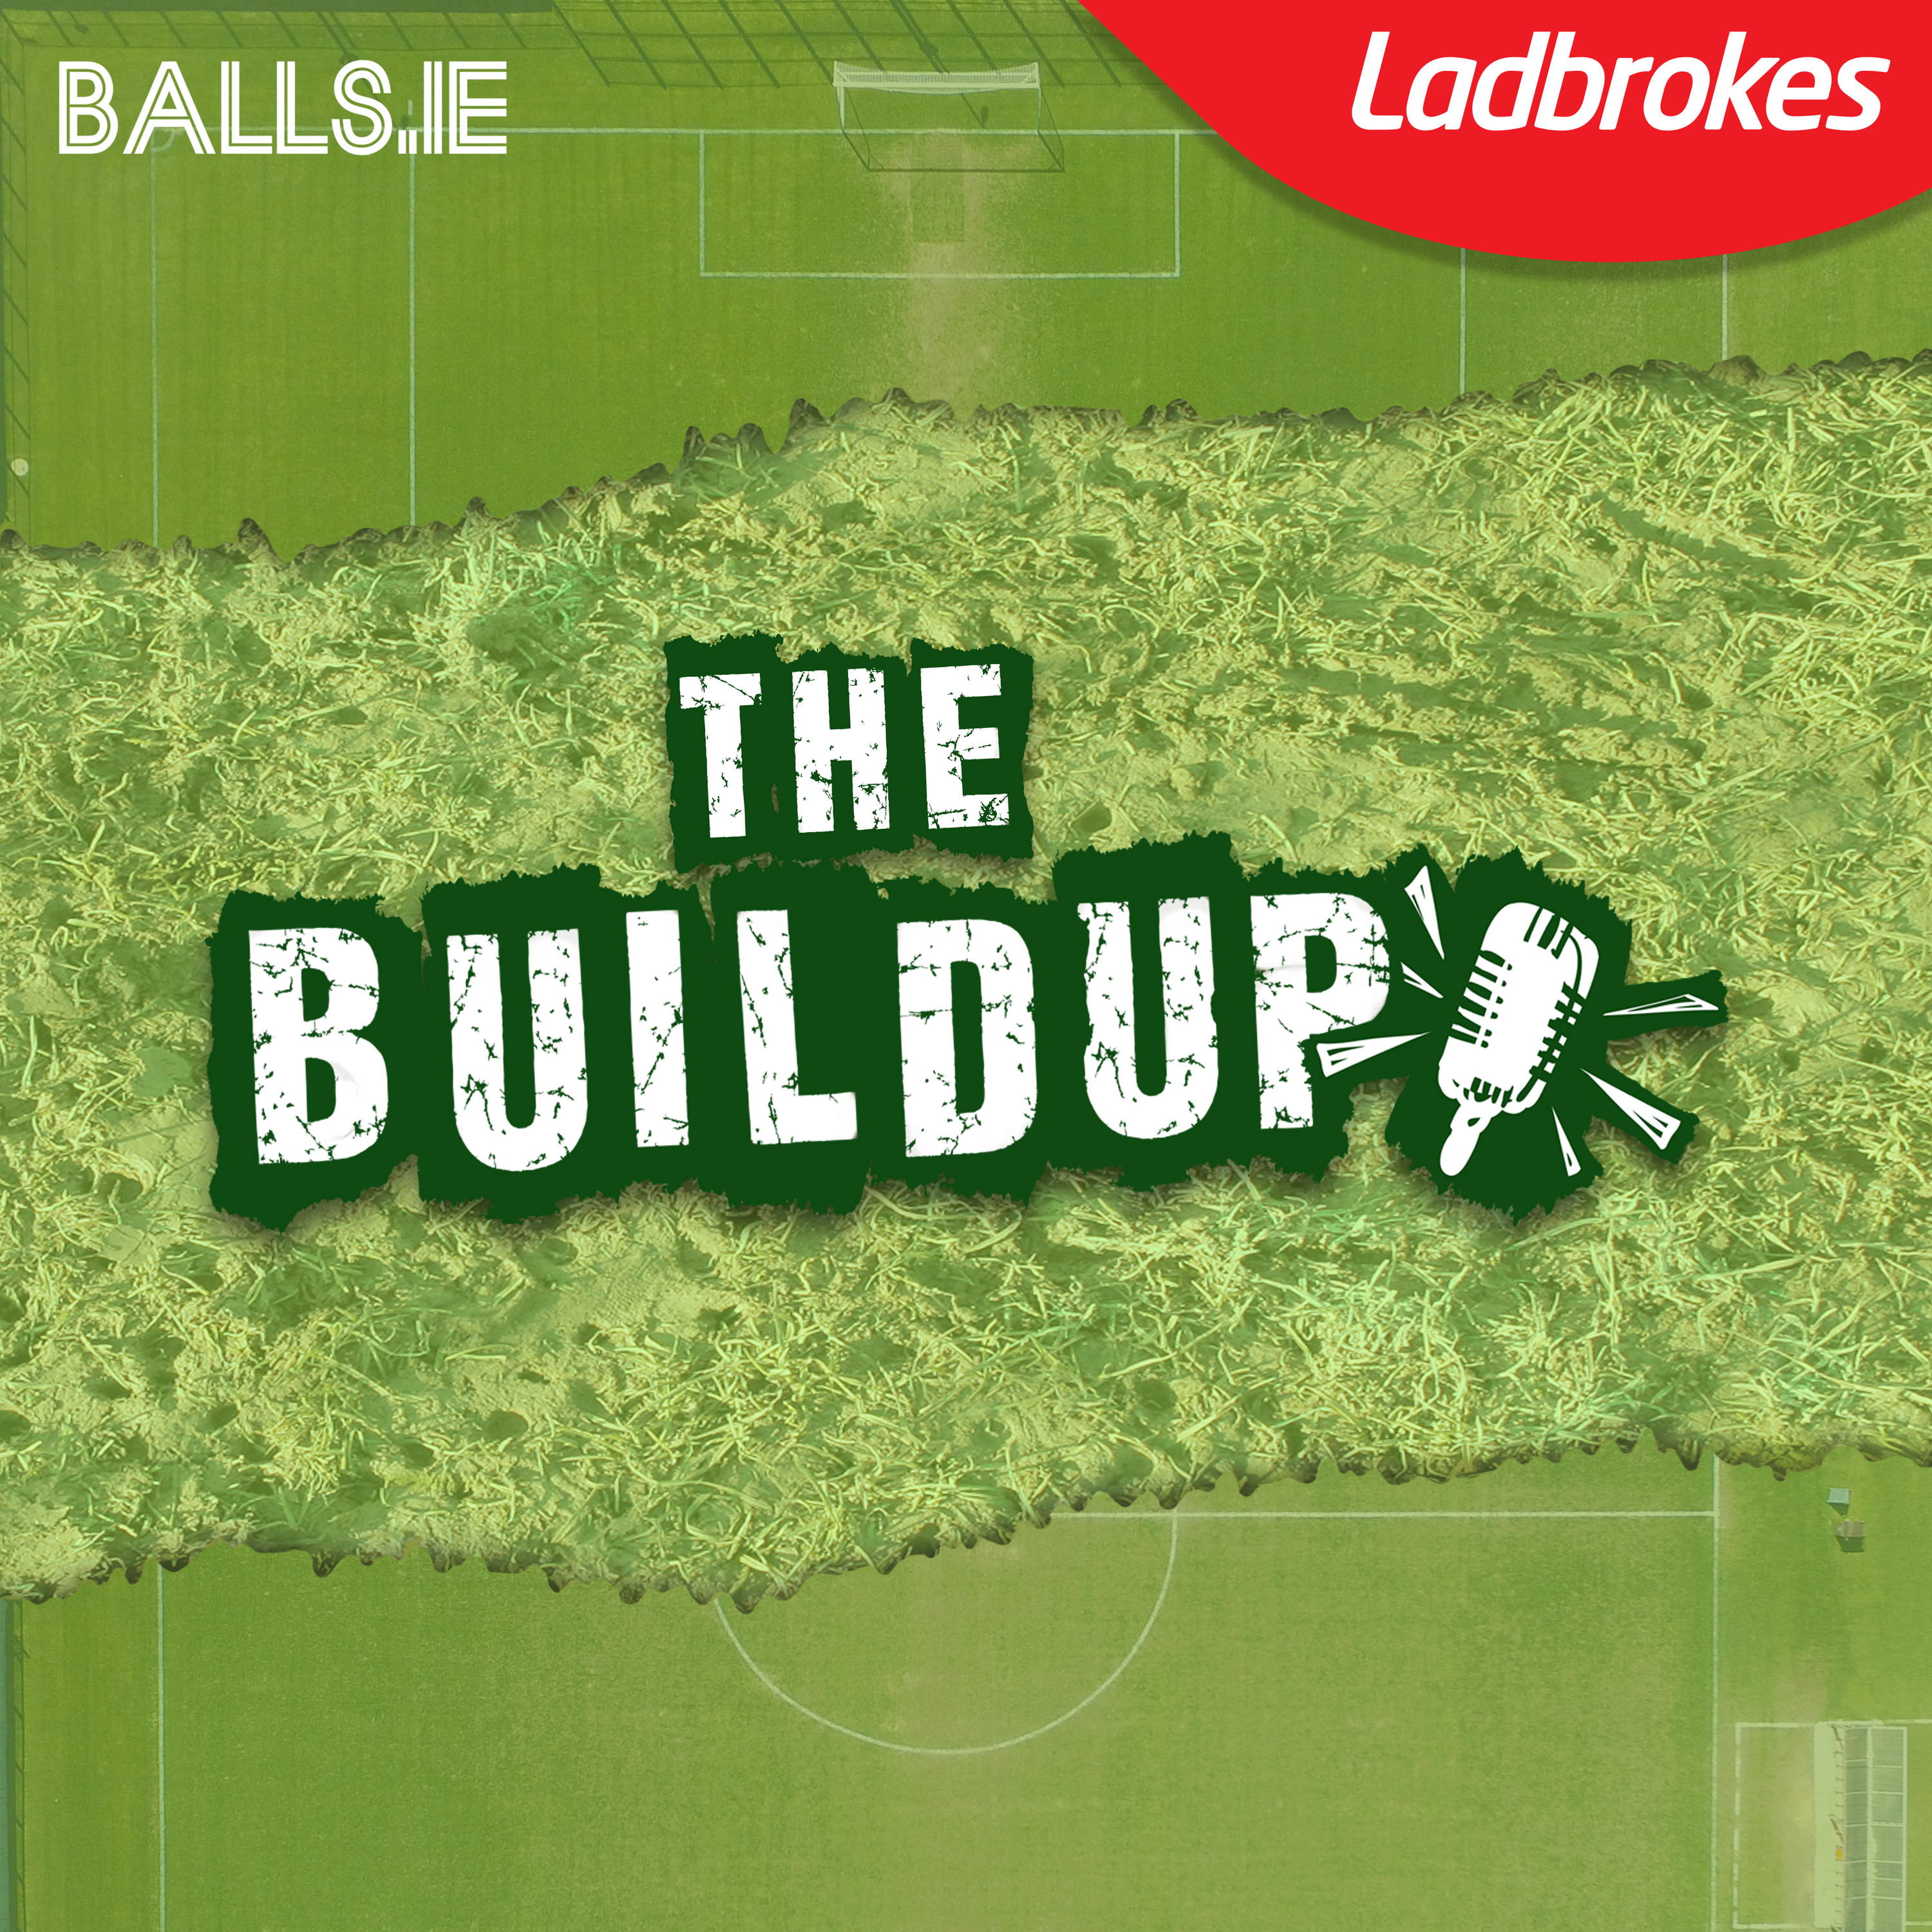 The Buildup Rugby - Ireland V New Zealand - The Stephen Ferris' Verdict